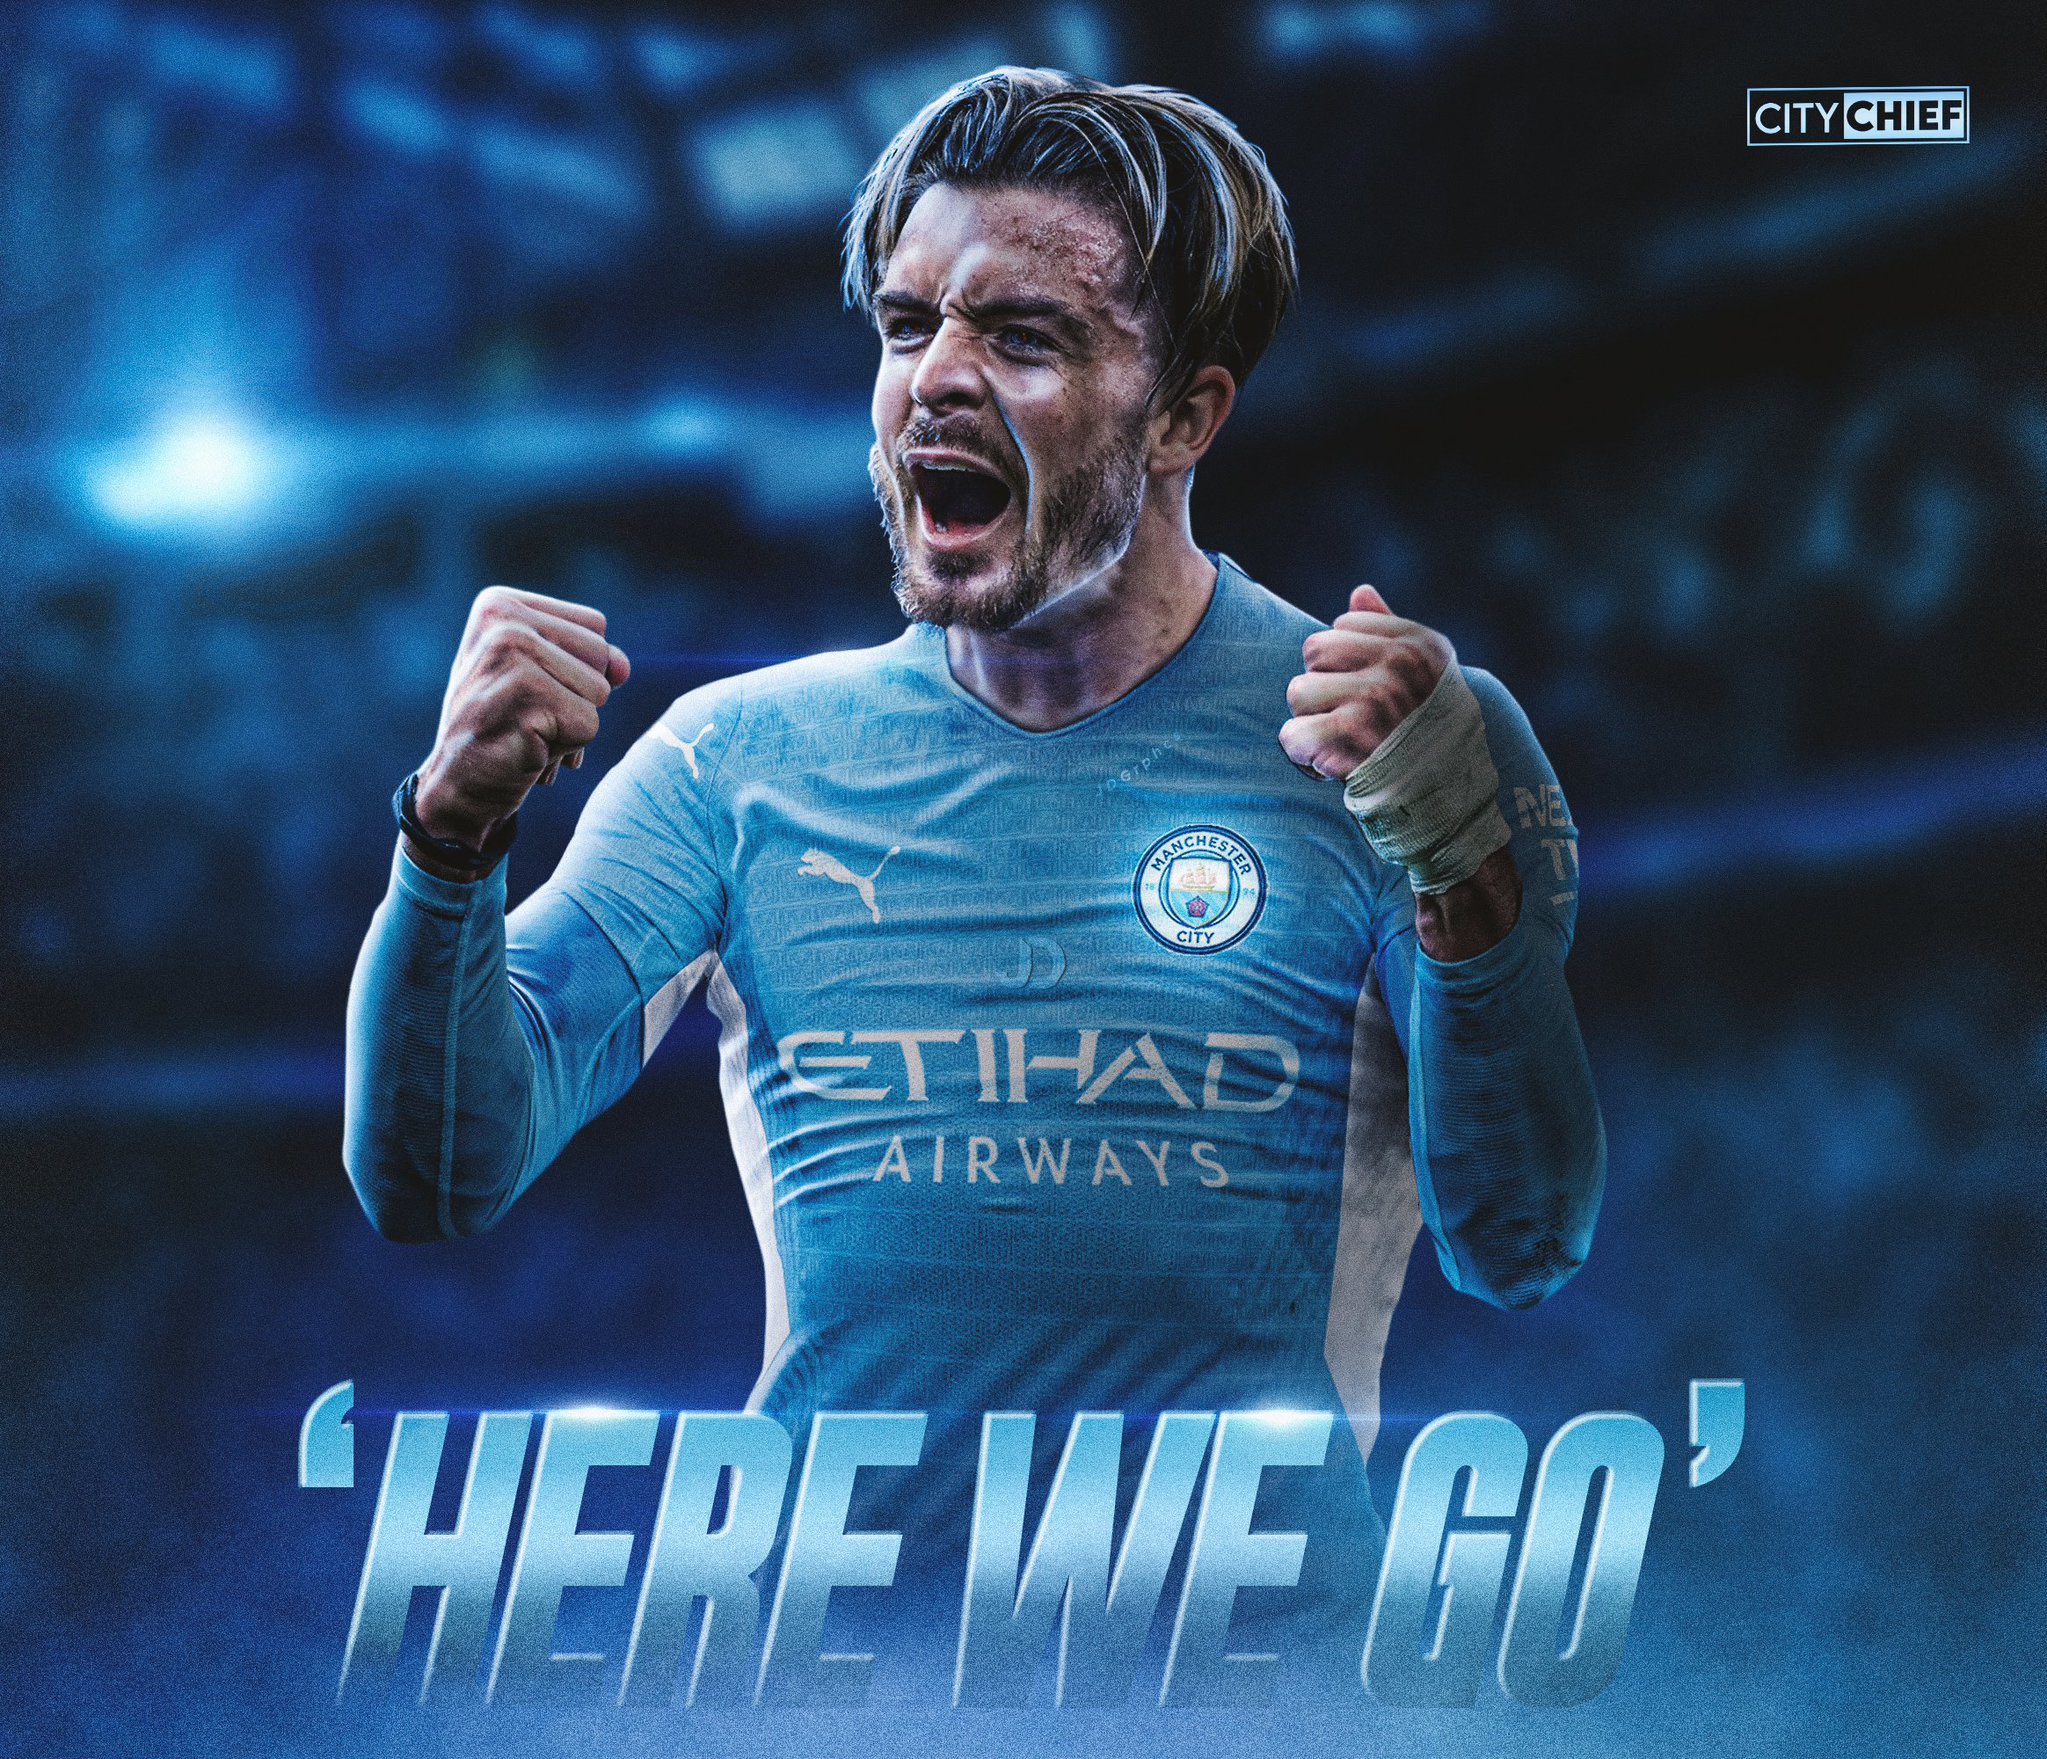 Grealish Manchester City wallpaper